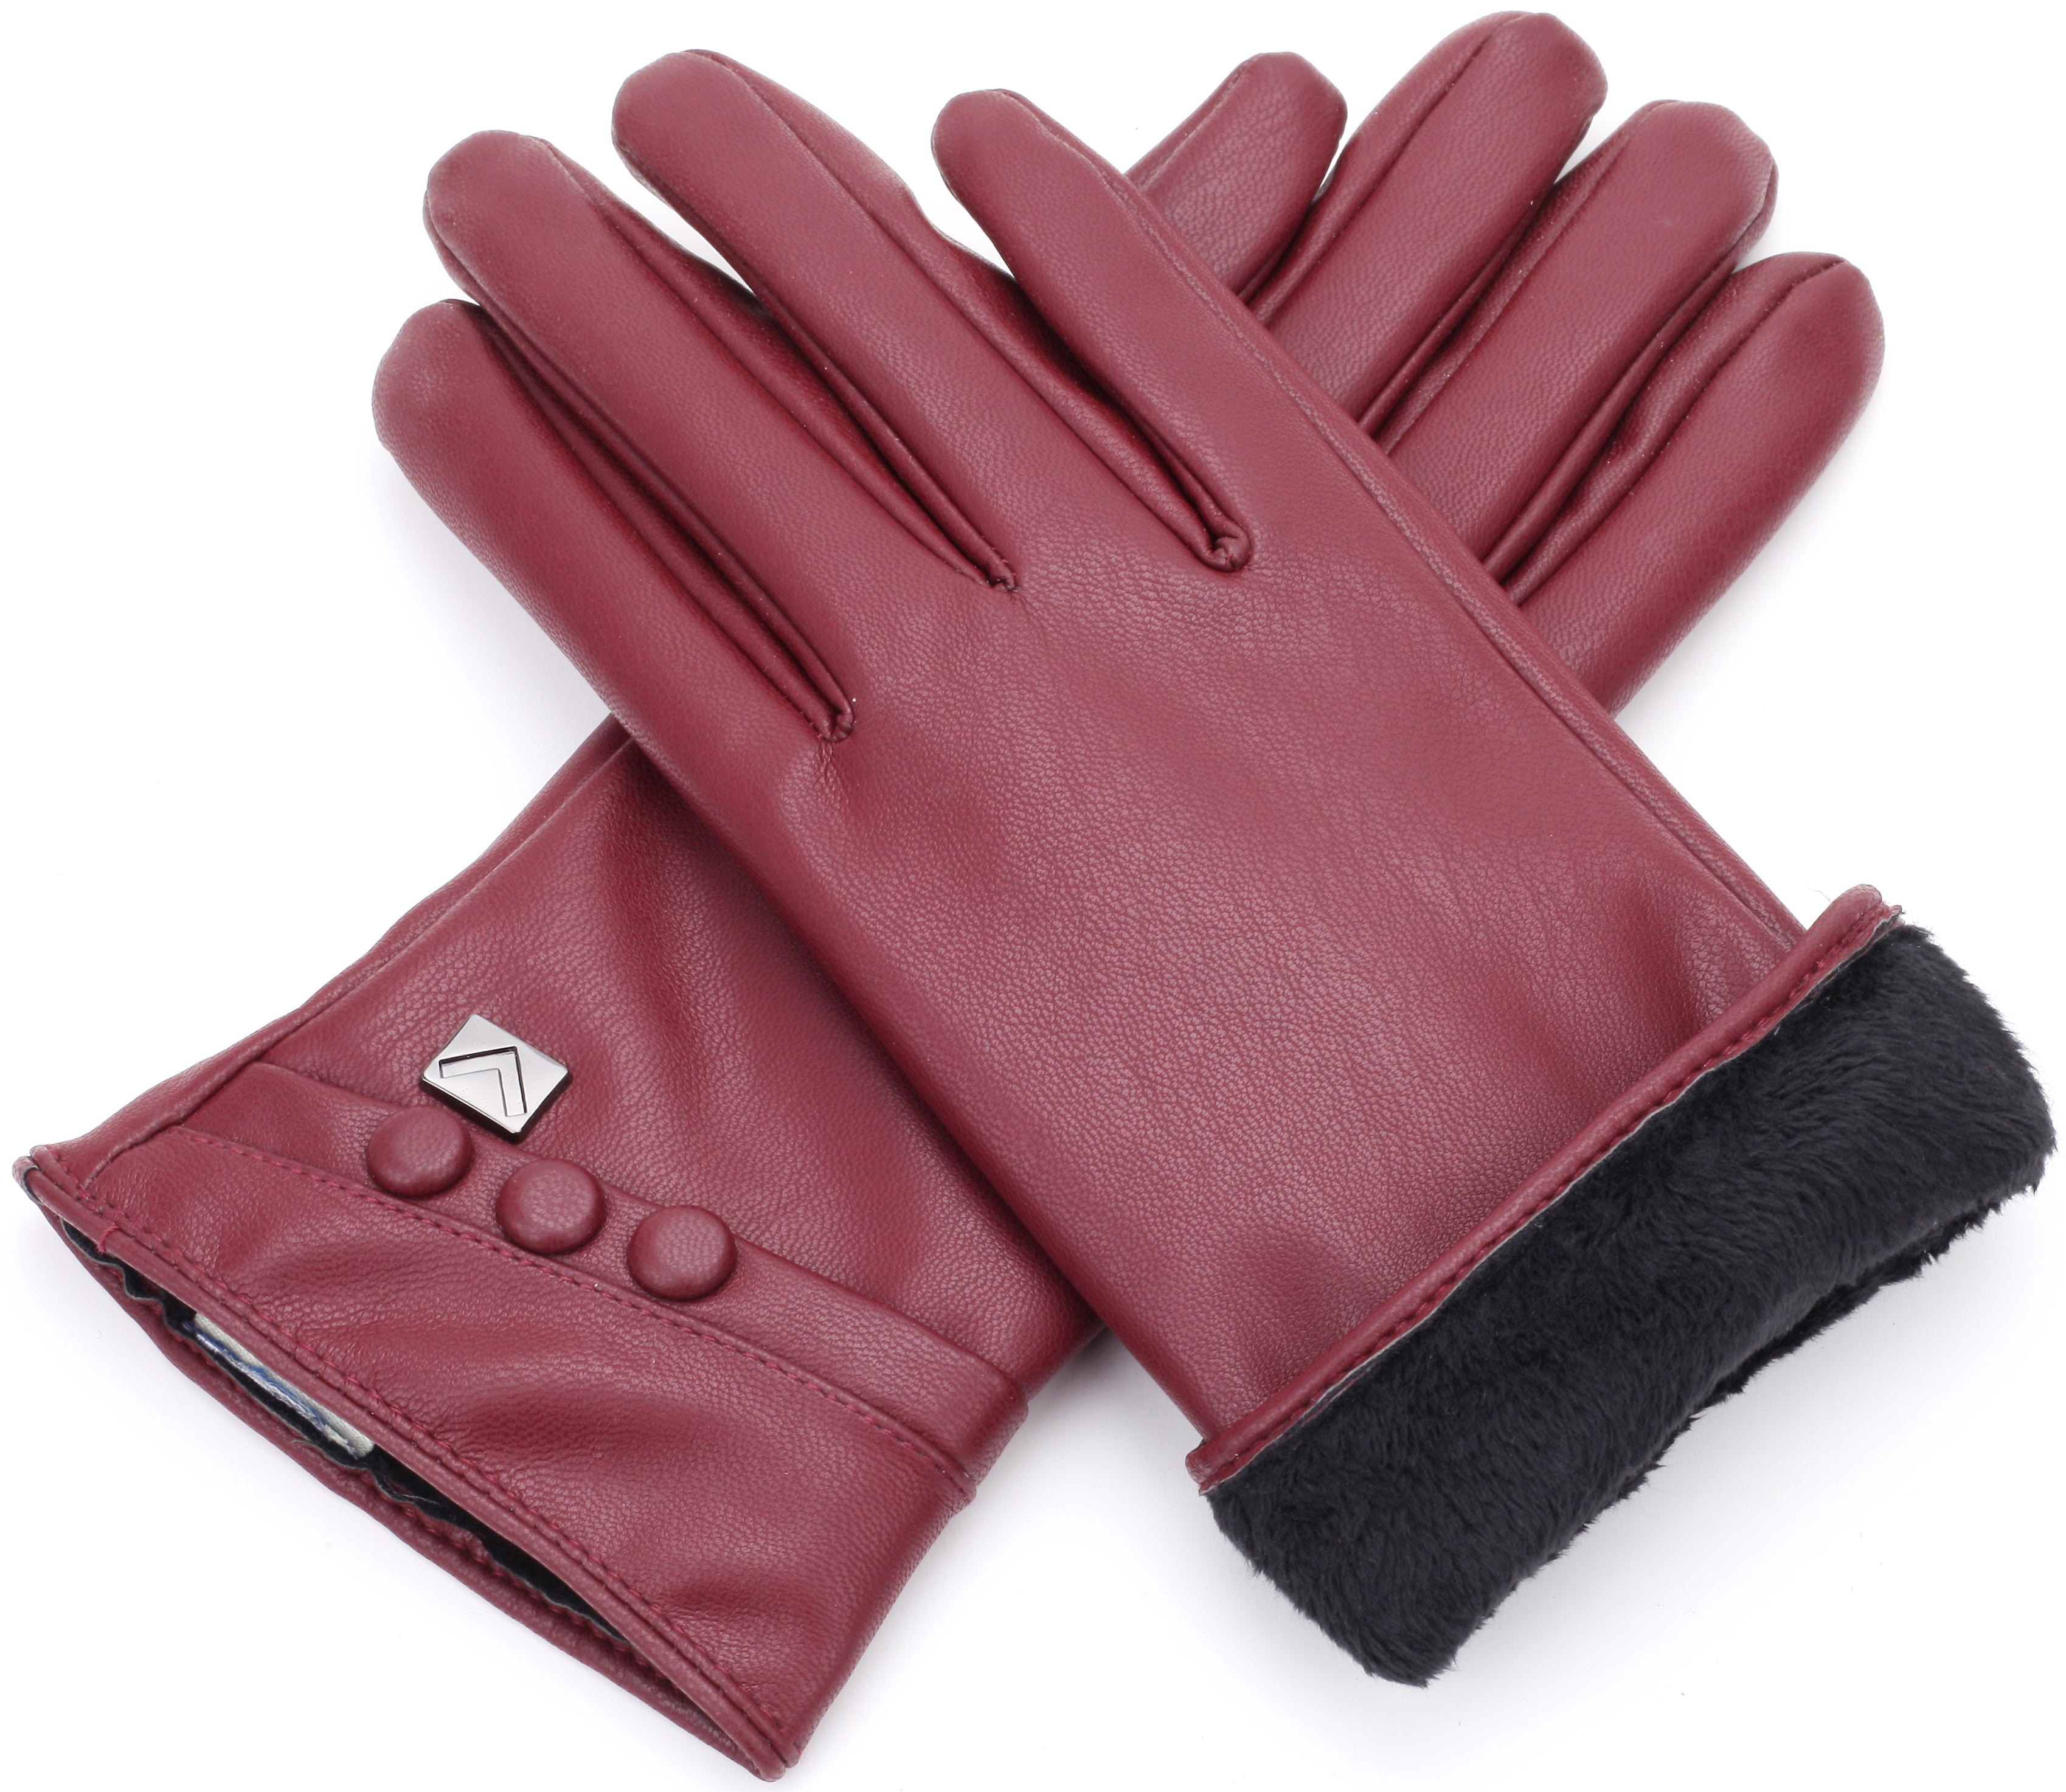 Gallery Seven Women S Winter Gloves Warm Touchscreen Driving Texting Ladies Gloves Burgundy